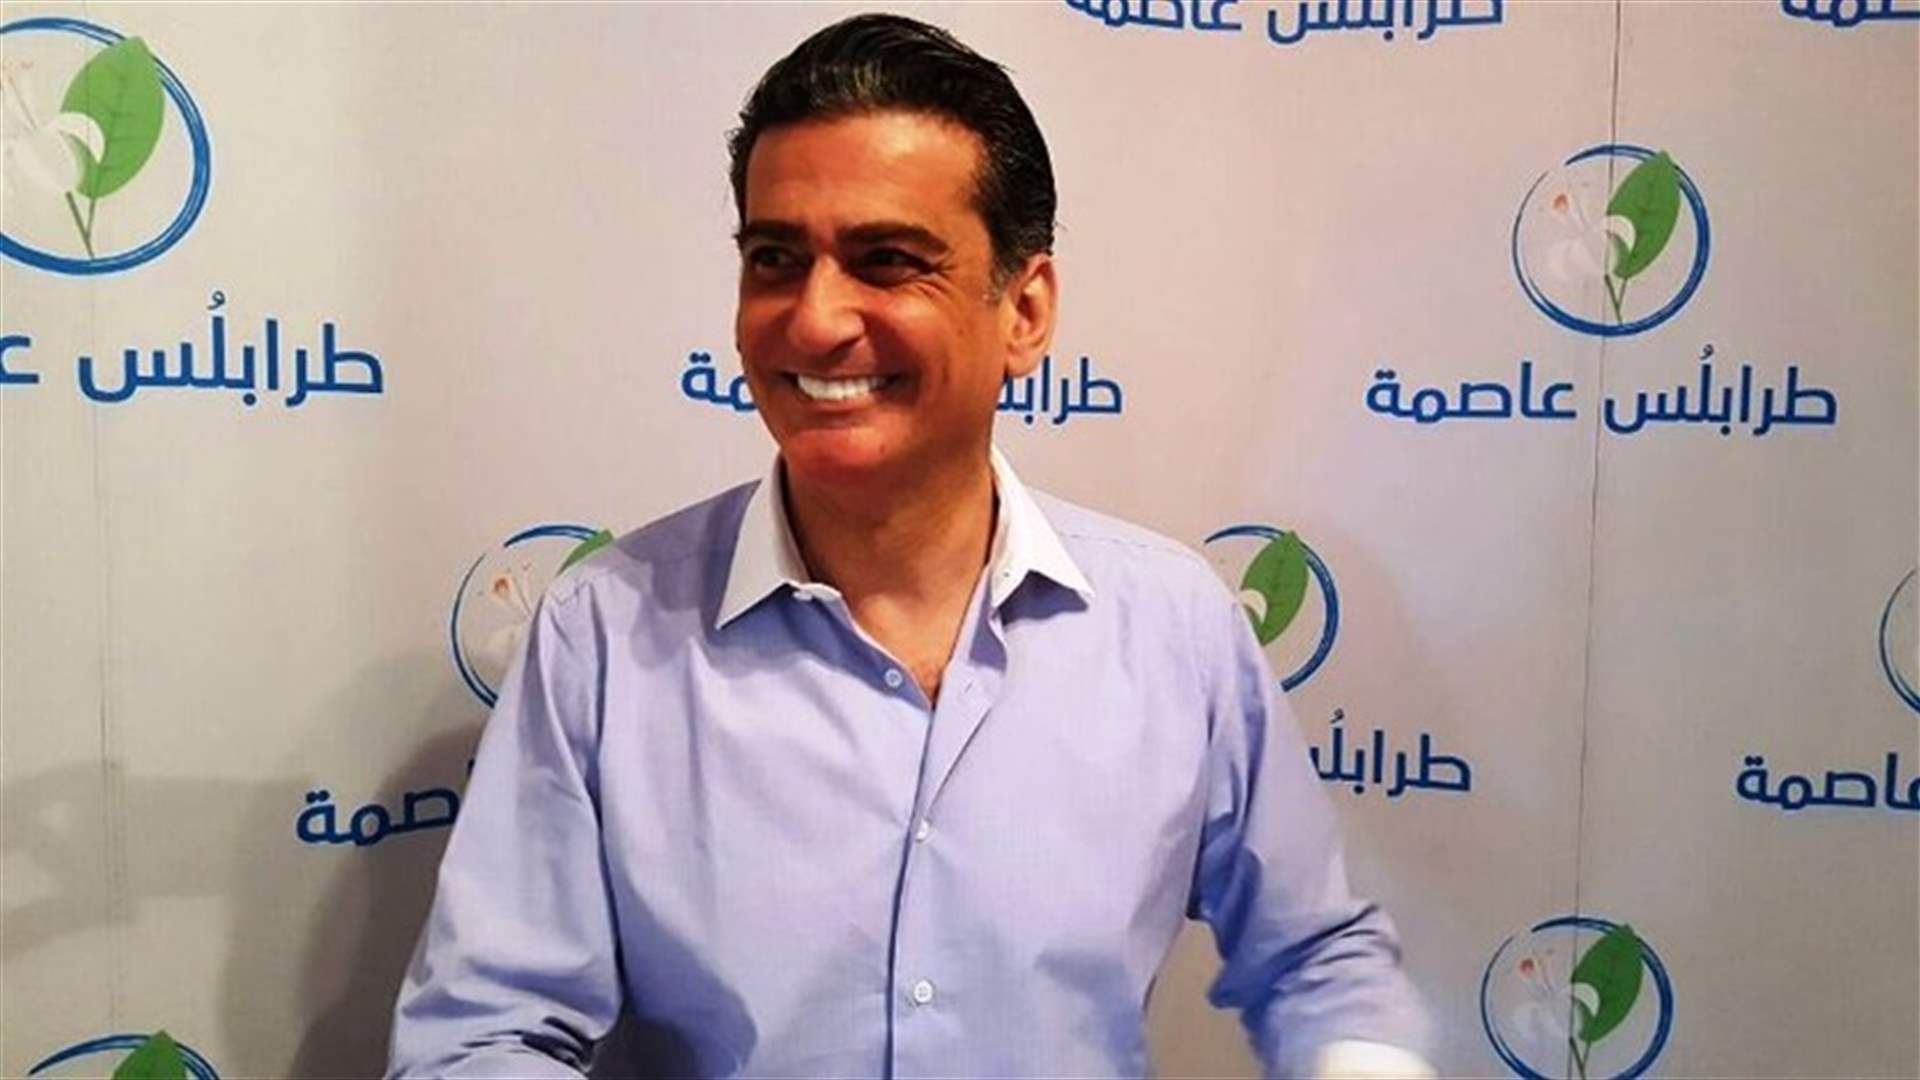 Al-Ahdab runs for municipal elections in Tripoli